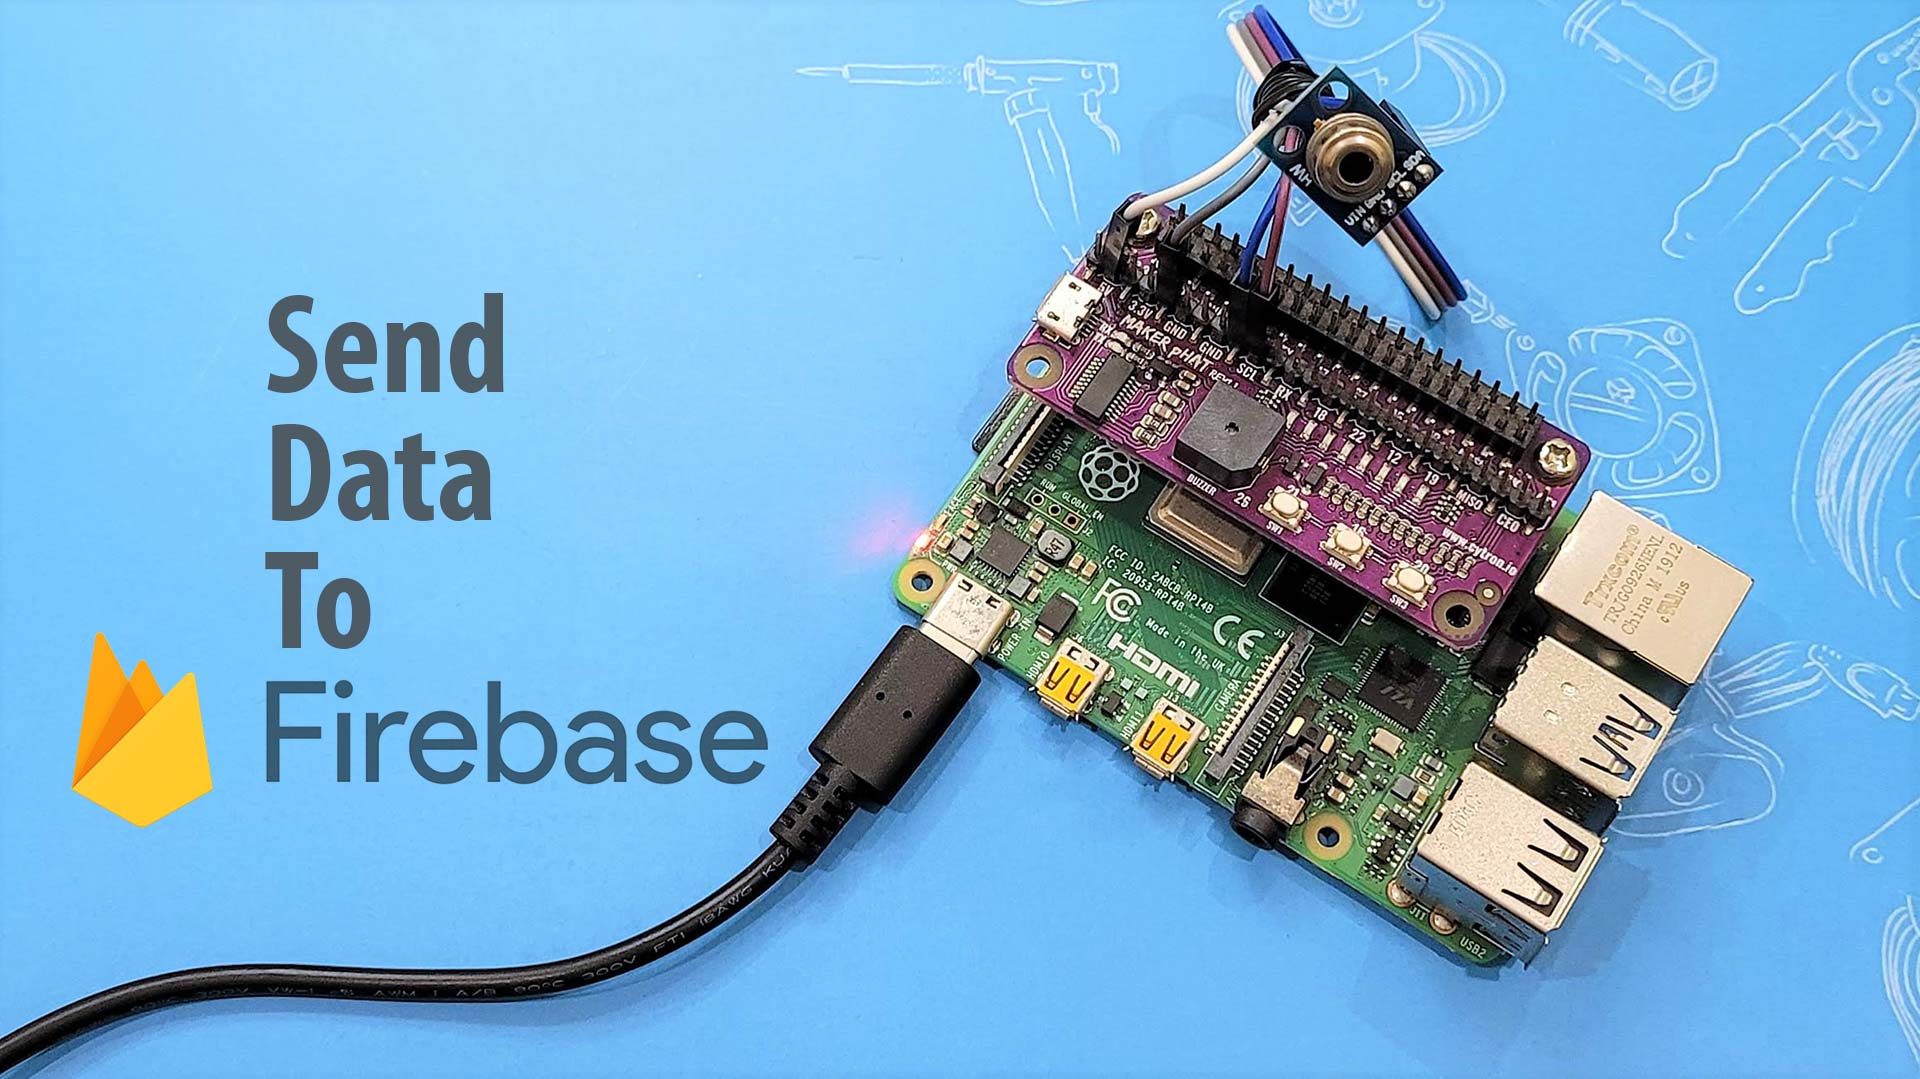 Send Data to Firebase Using Raspberry Pi